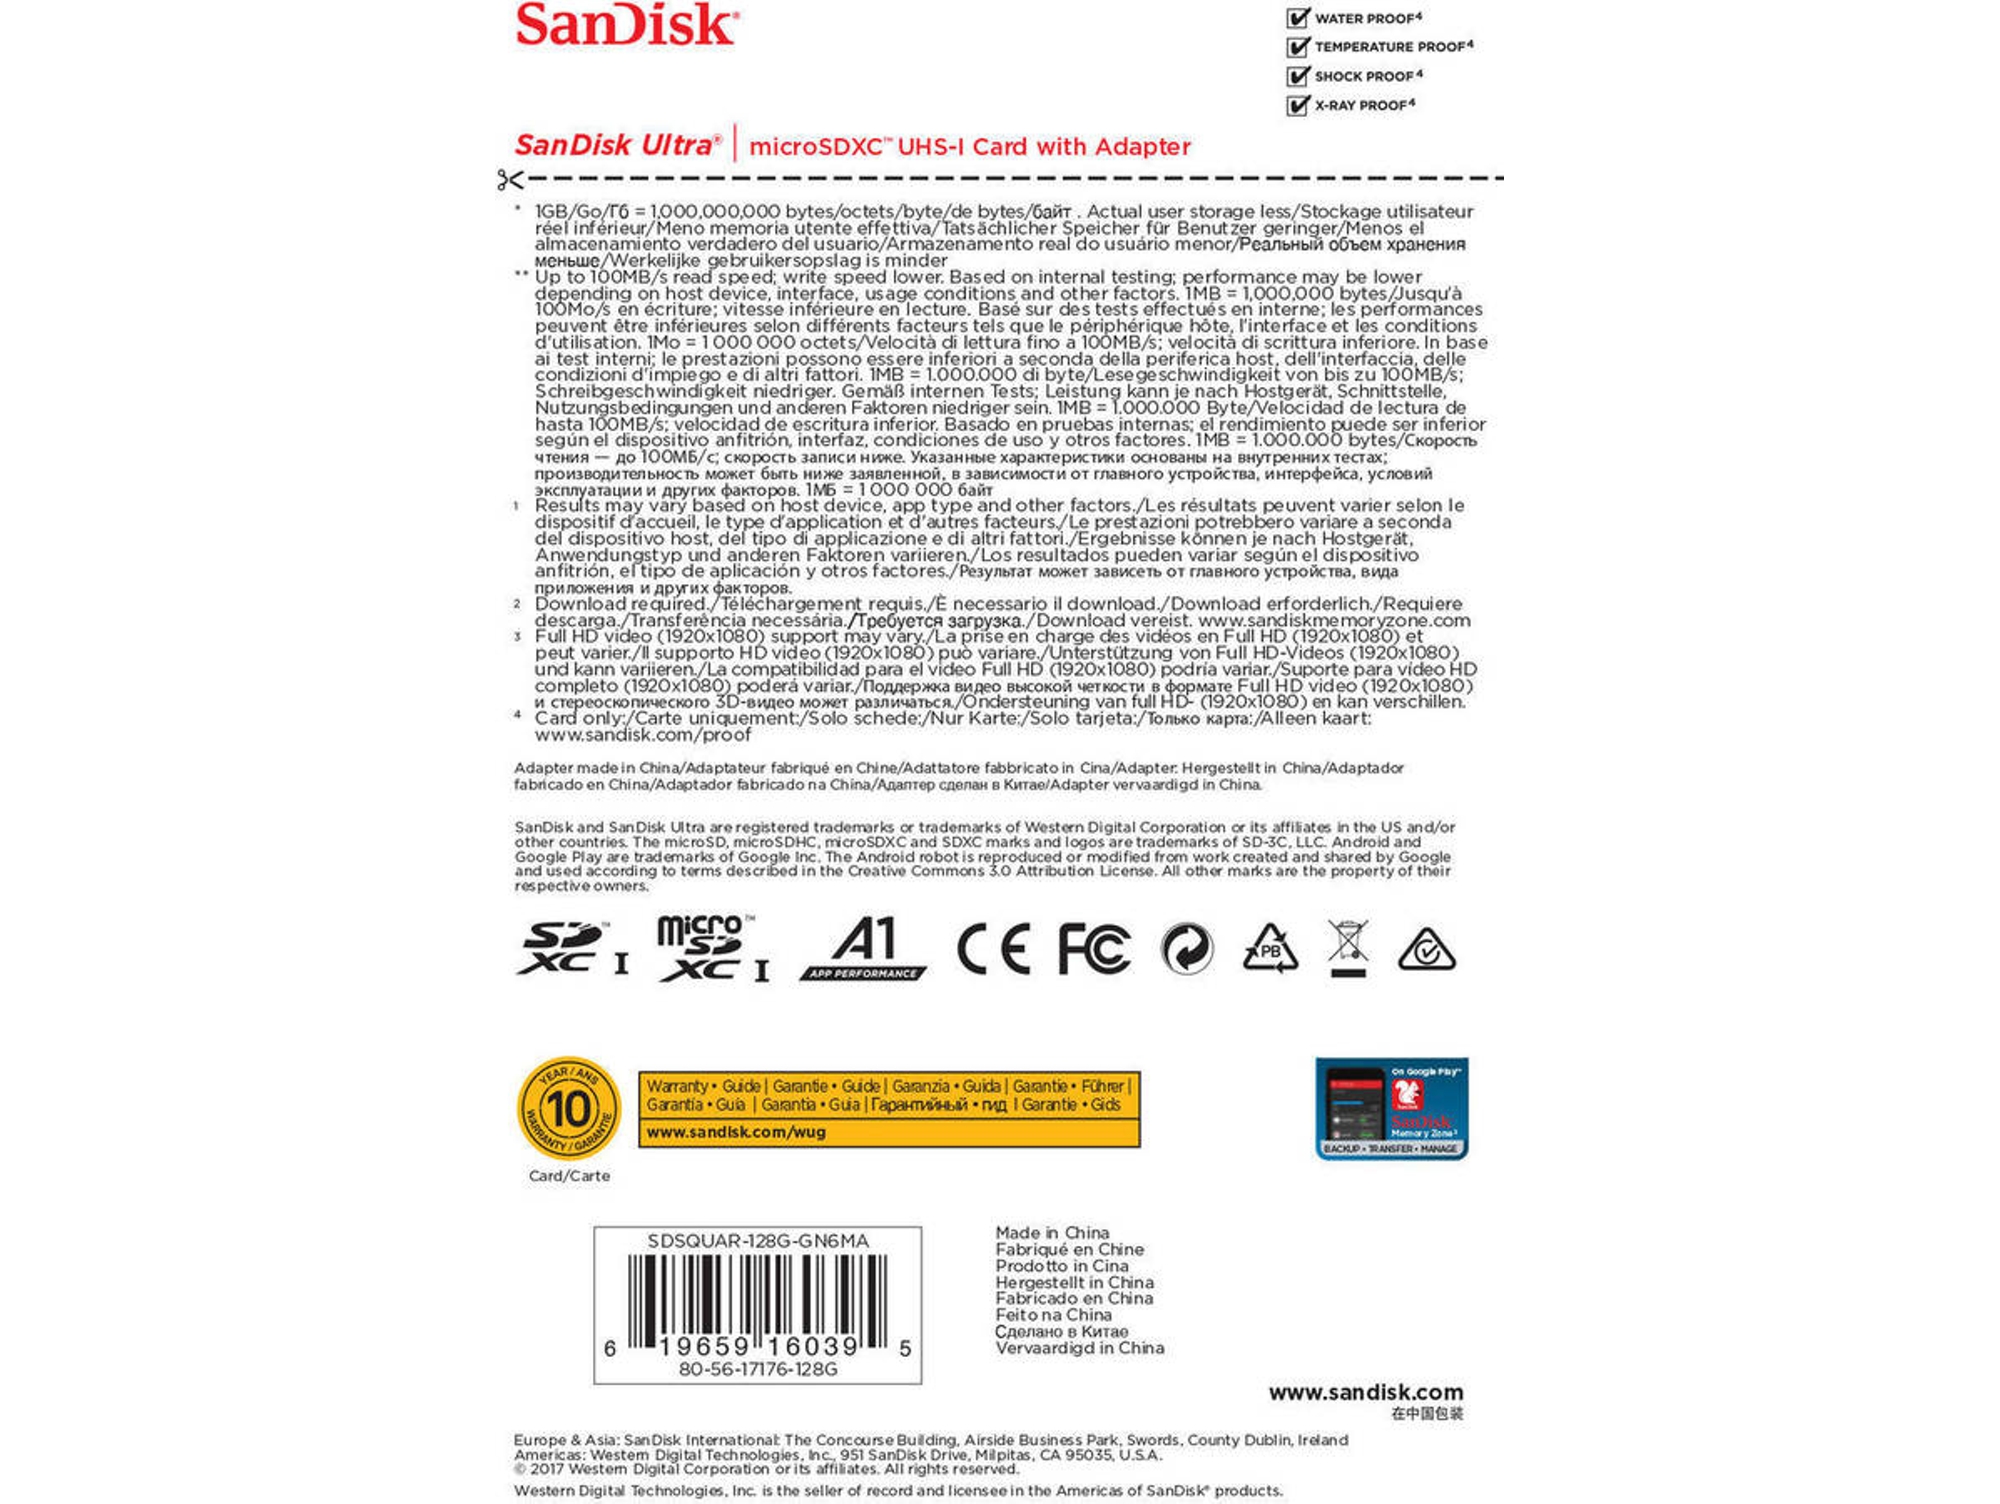 Memoria micro SD de 128 GB + Adaptador Sandisk